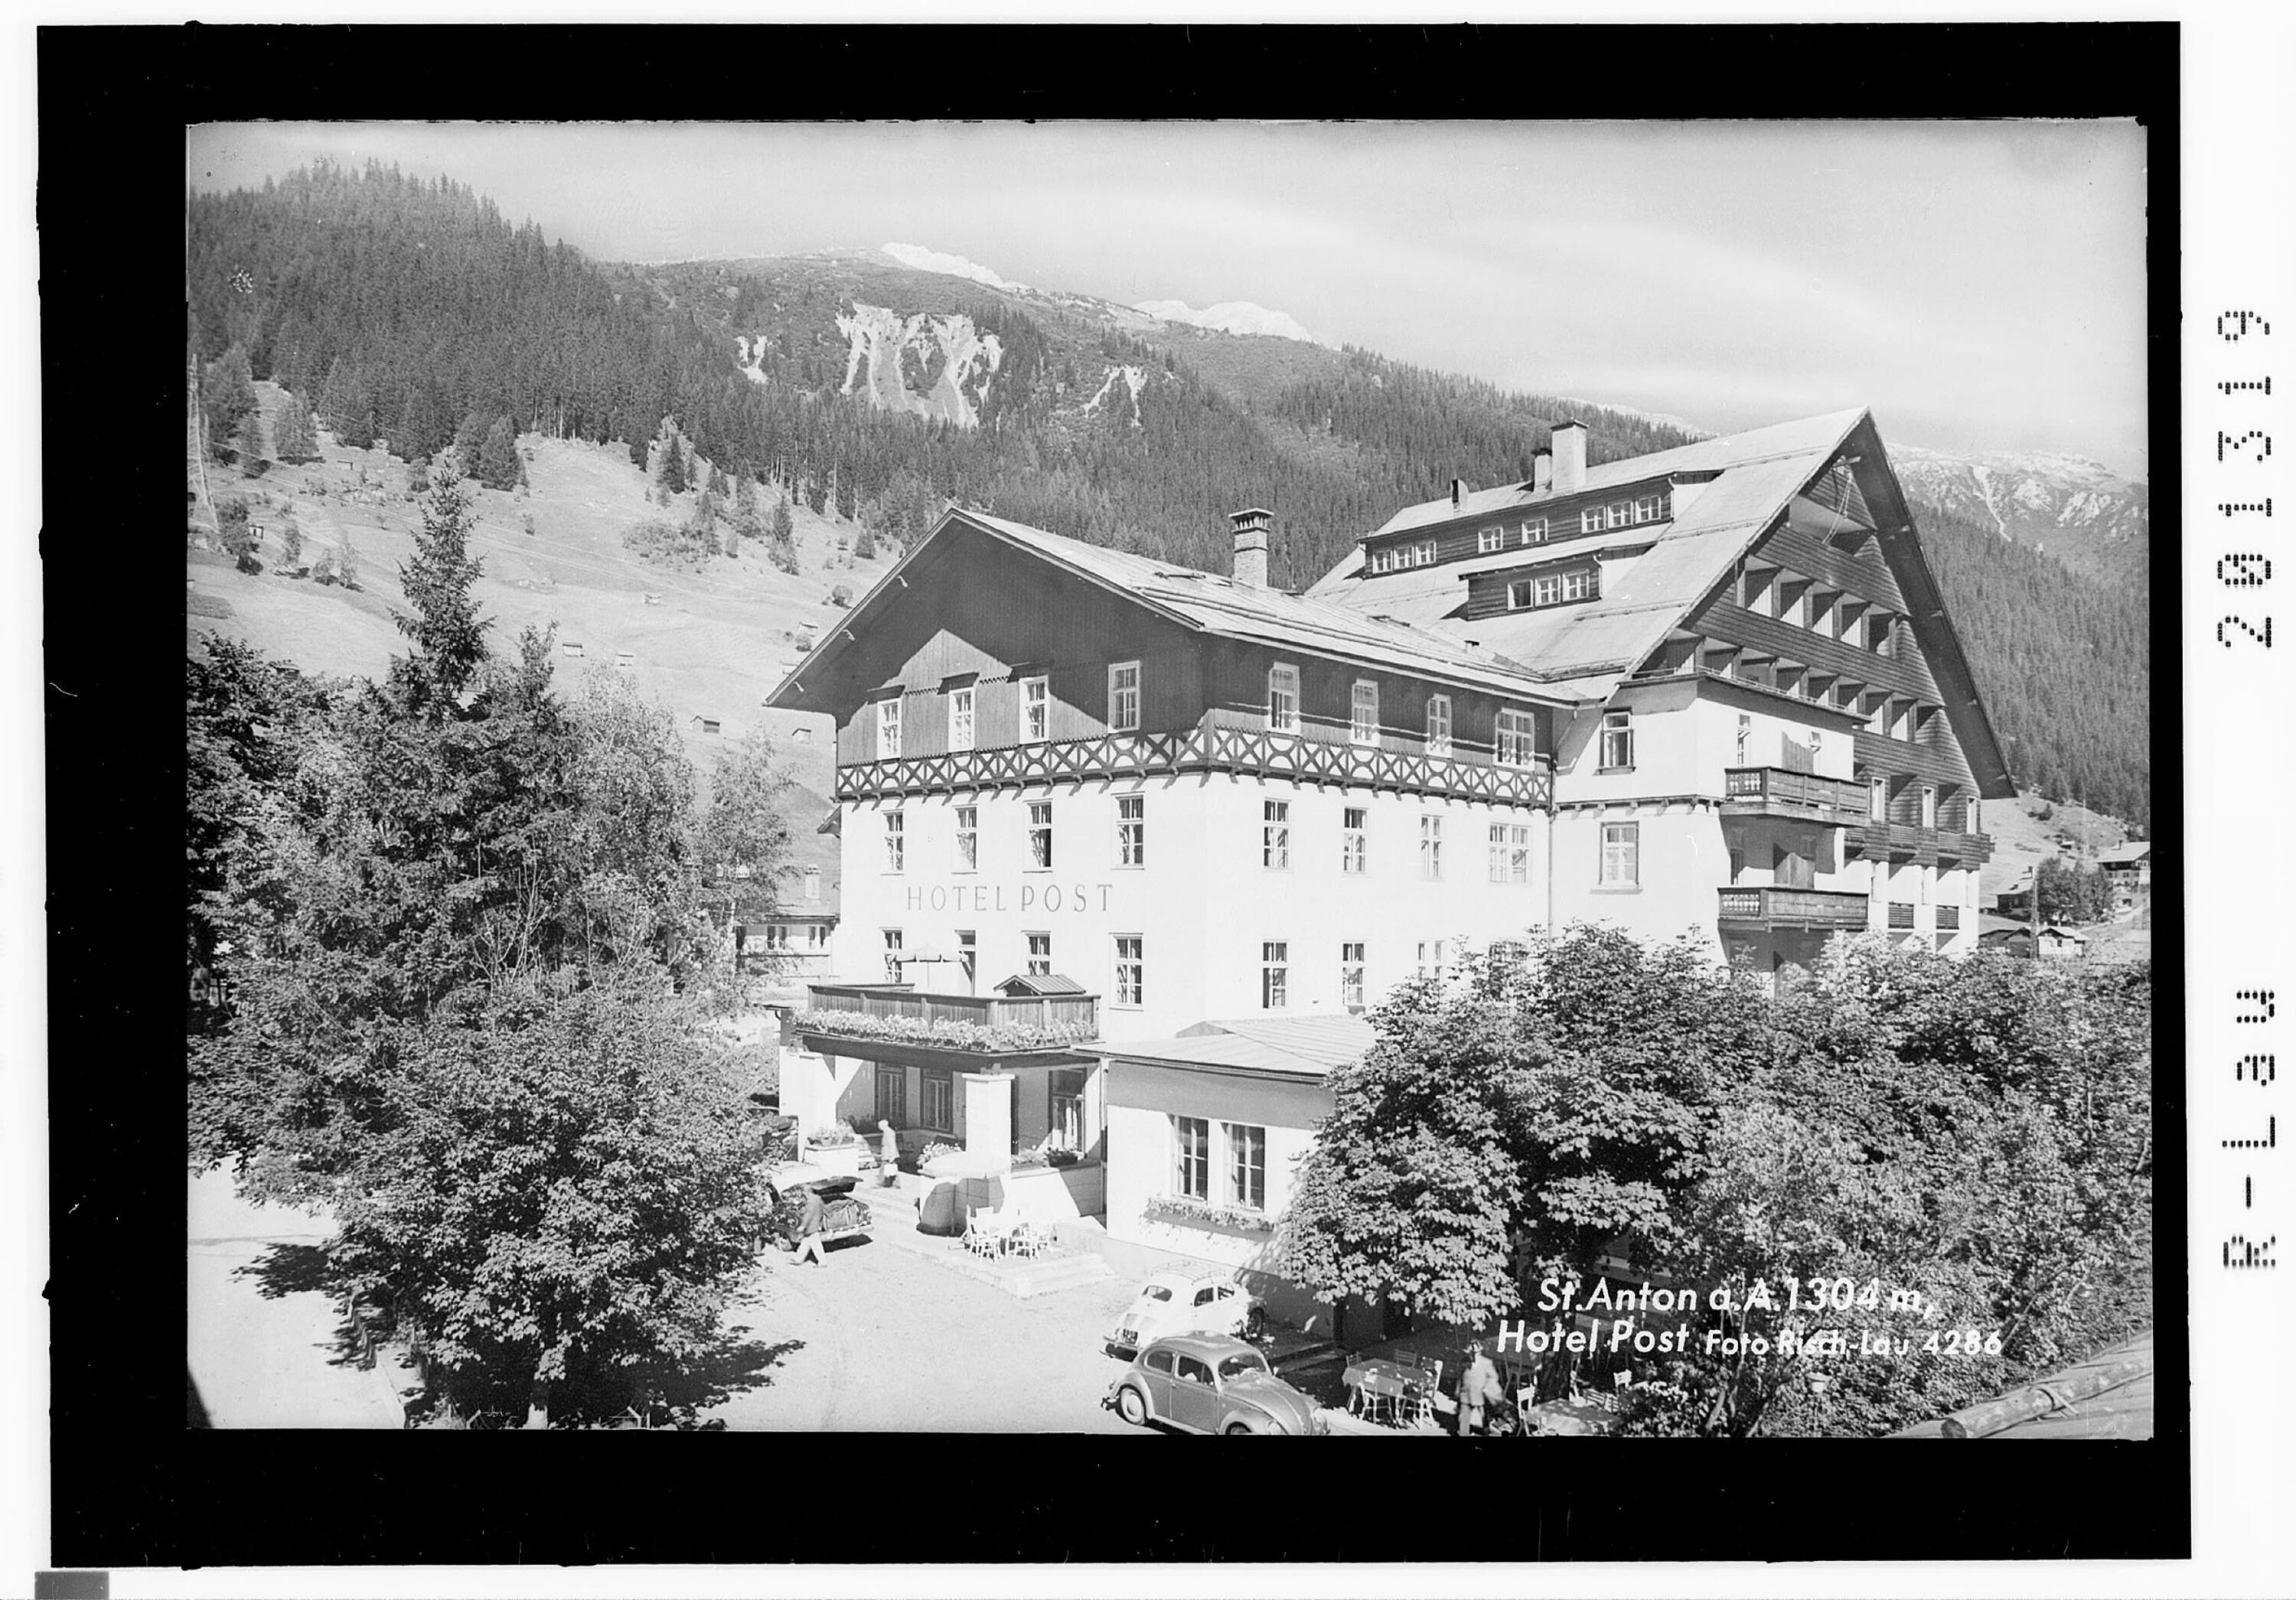 St.Anton am Arlberg 1304 m / Hotel Post></div>


    <hr>
    <div class=